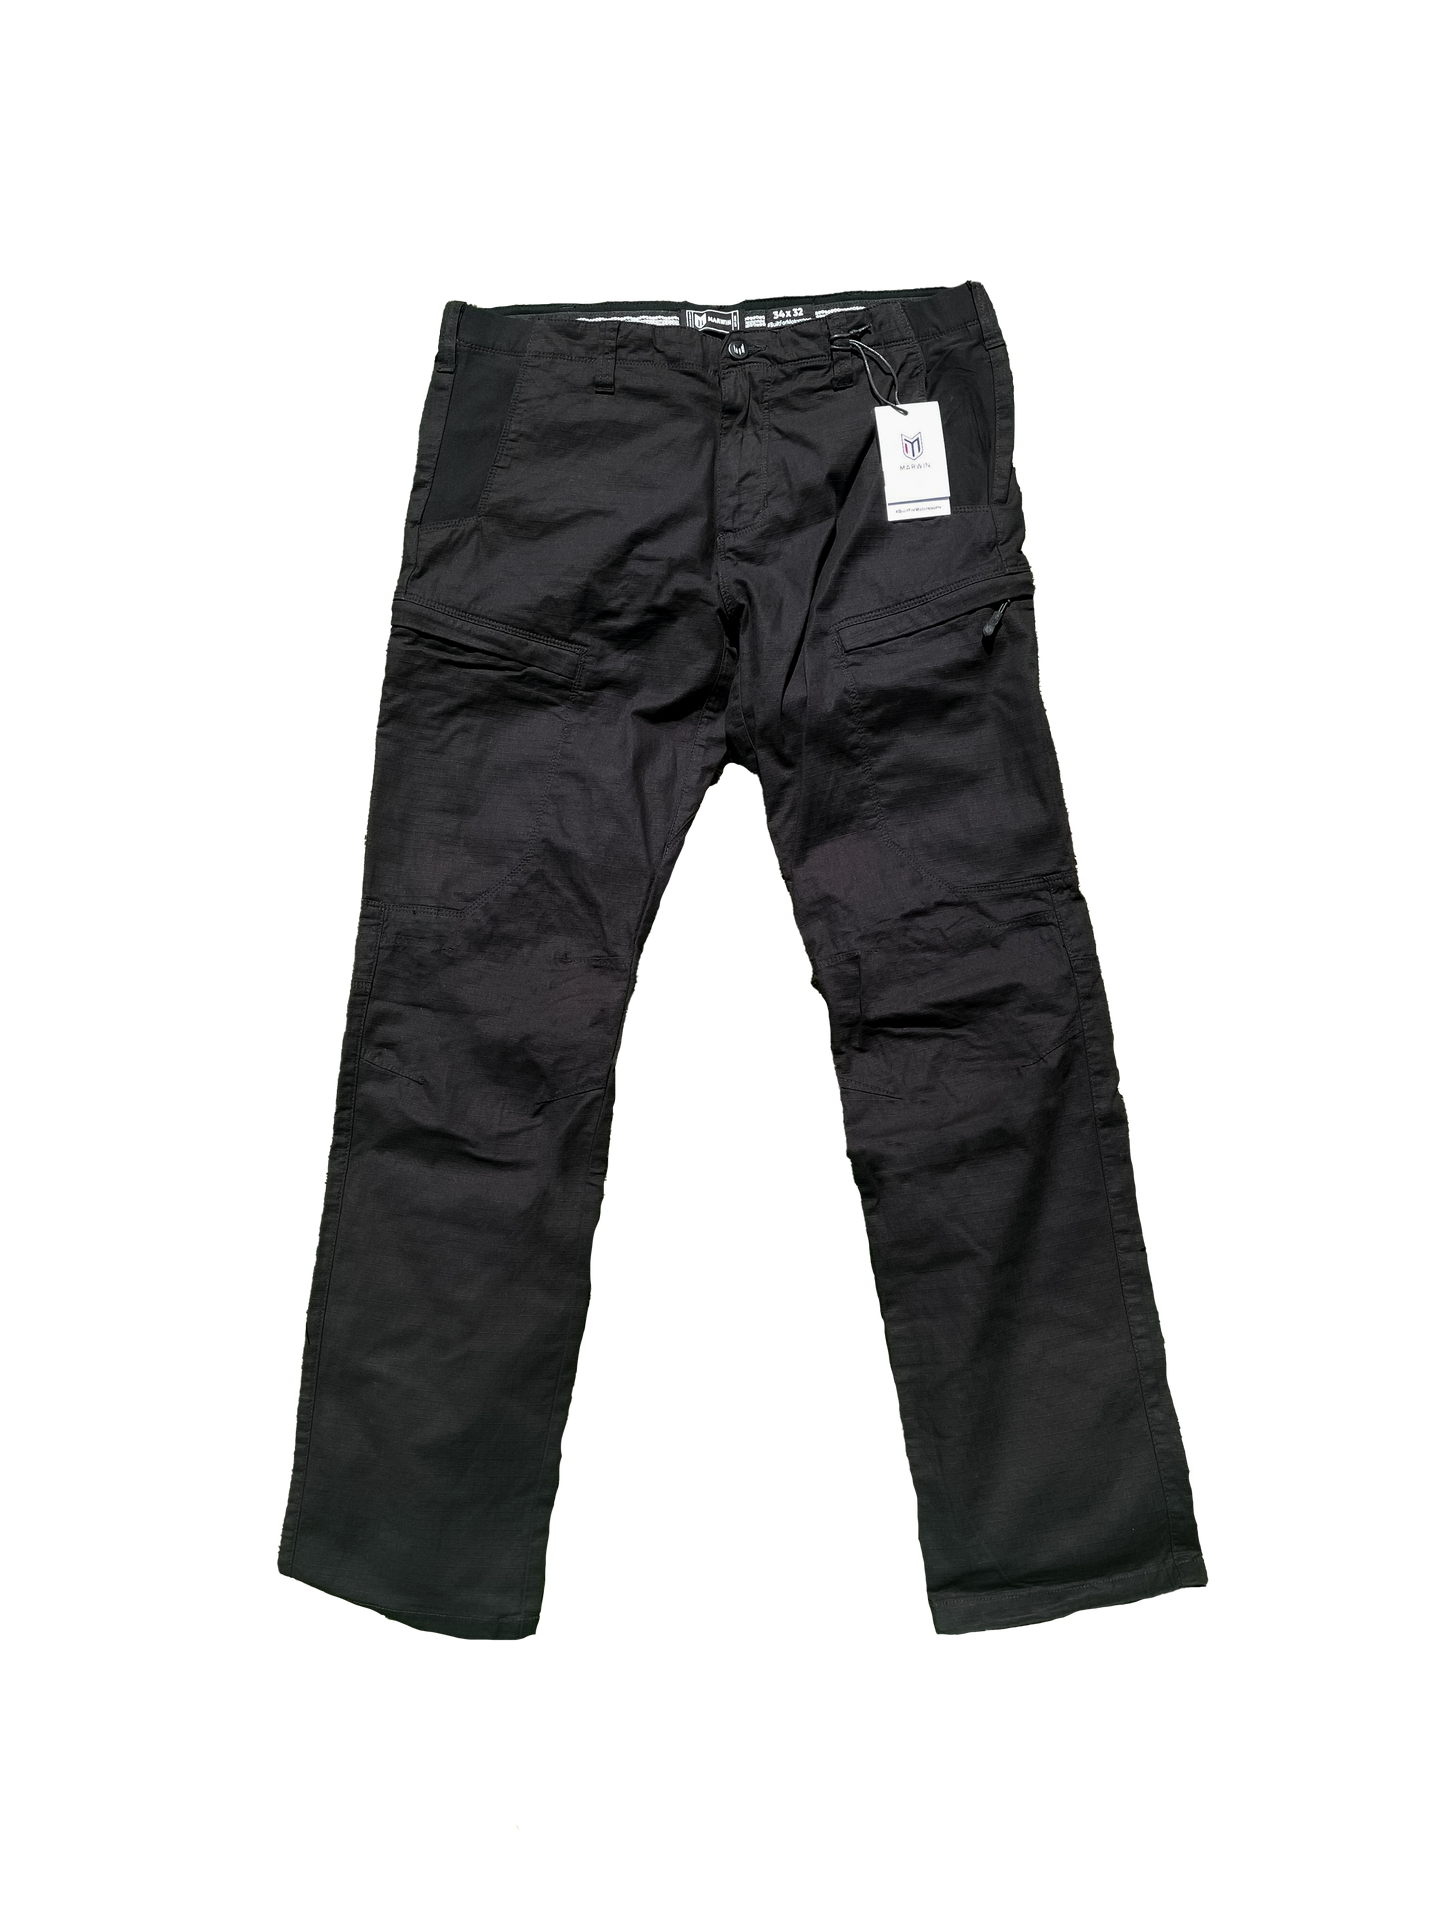 Evolution Black Cargo Pants